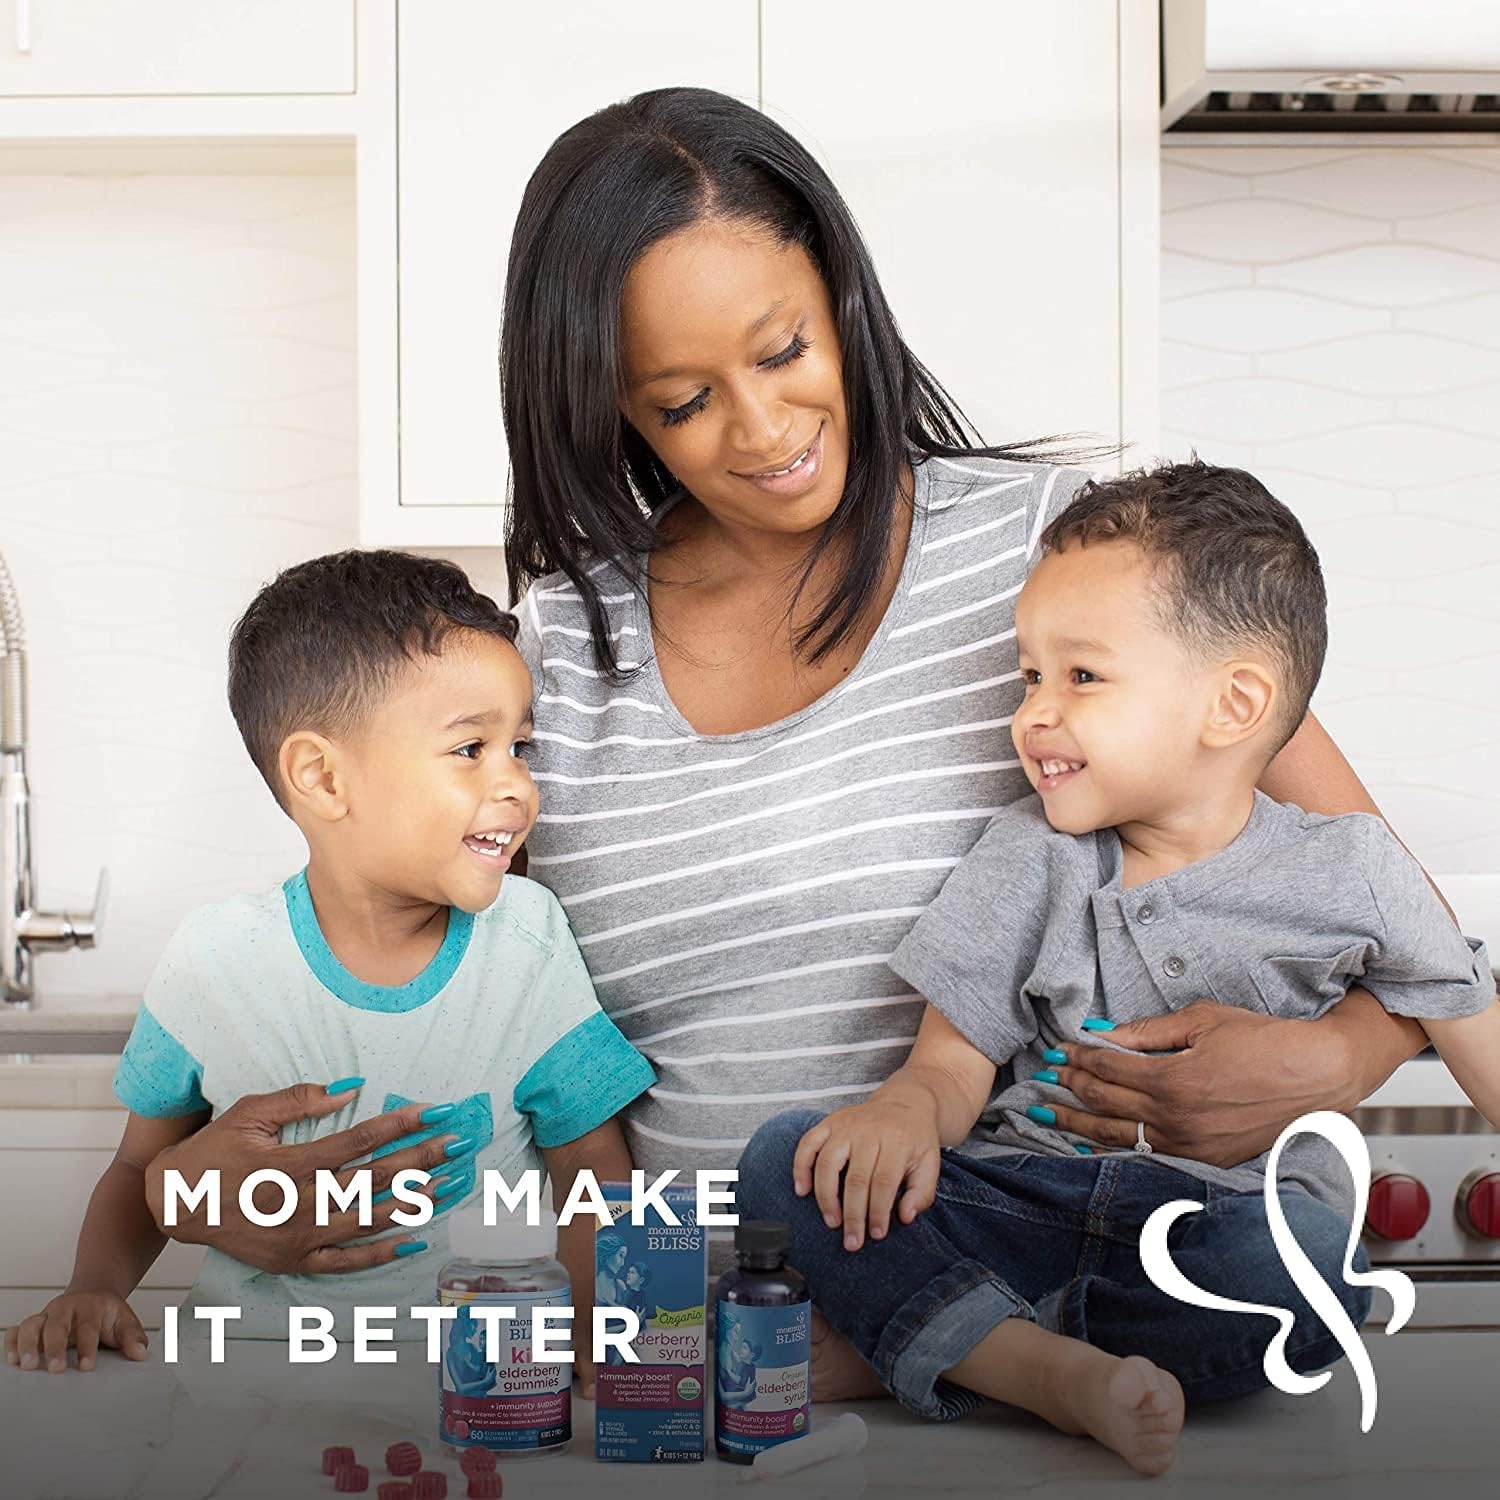 Mommy's Bliss Organic Elderberry Syrup & Immunity Boost With Vitamins, Prebiotics & Echinacea for Kids & Adults 1 yr+, 3 Fl Oz